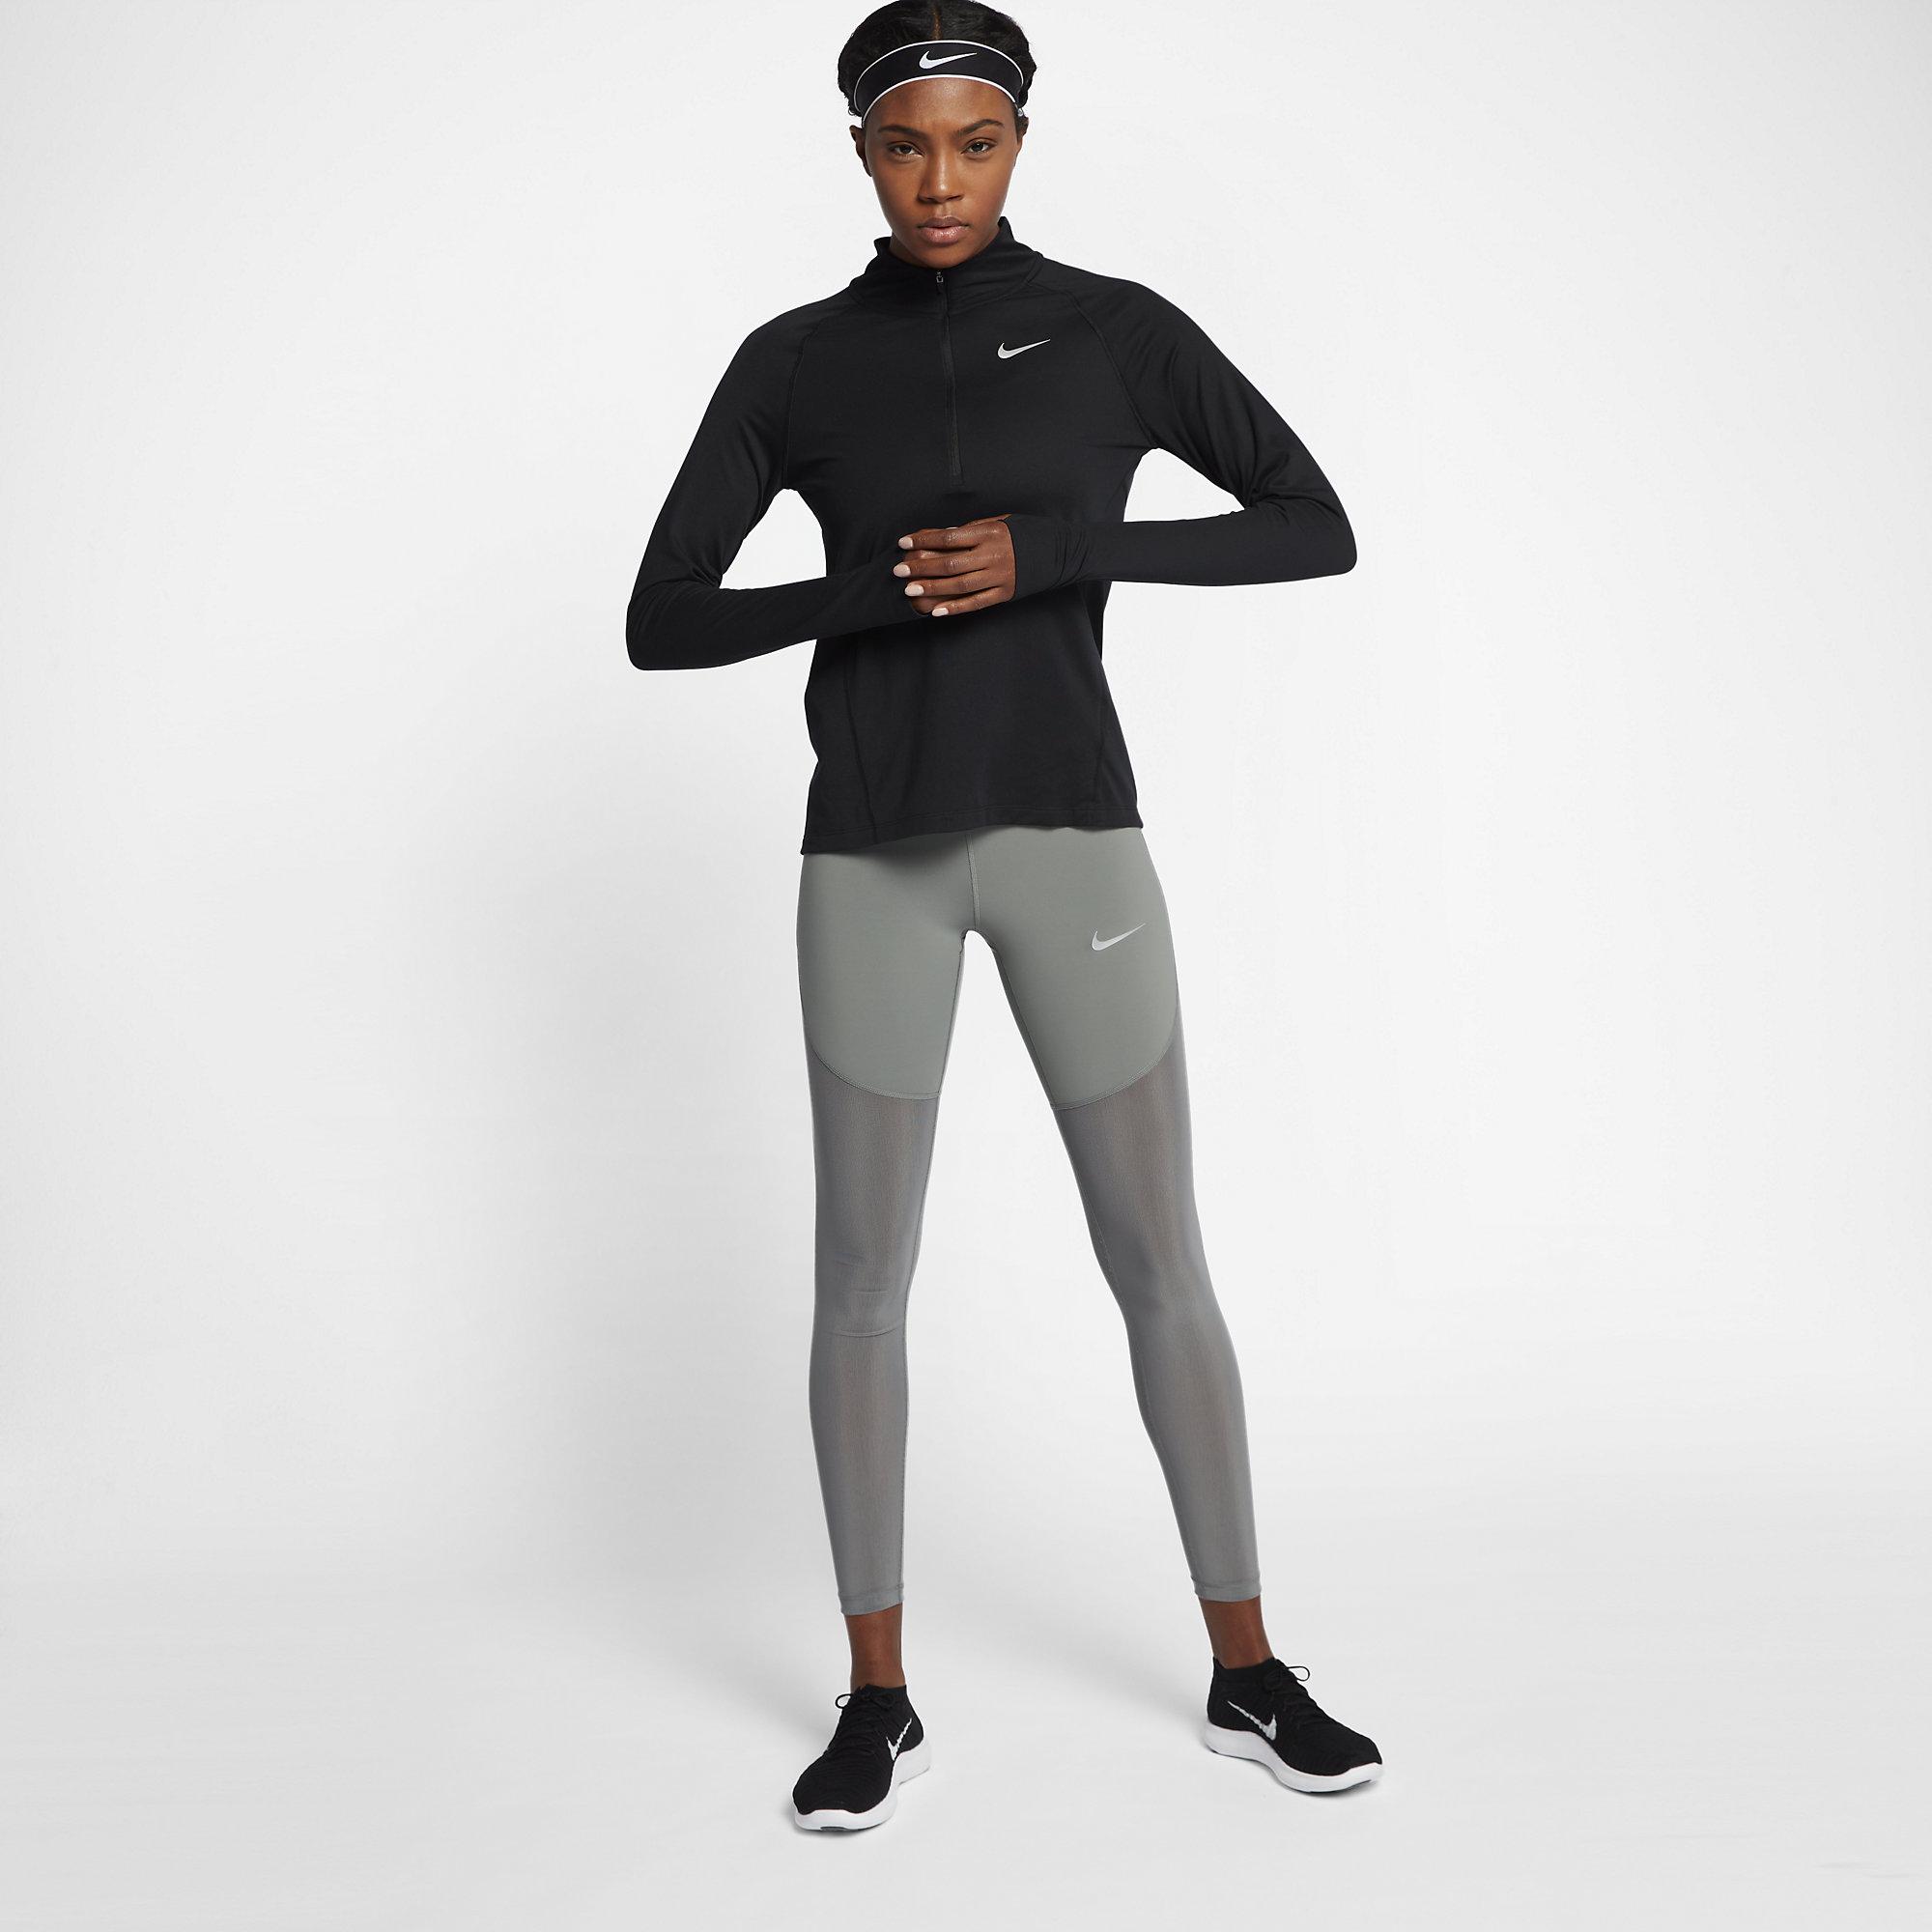 Nike Womens Running Top - Black - Tennisnuts.com